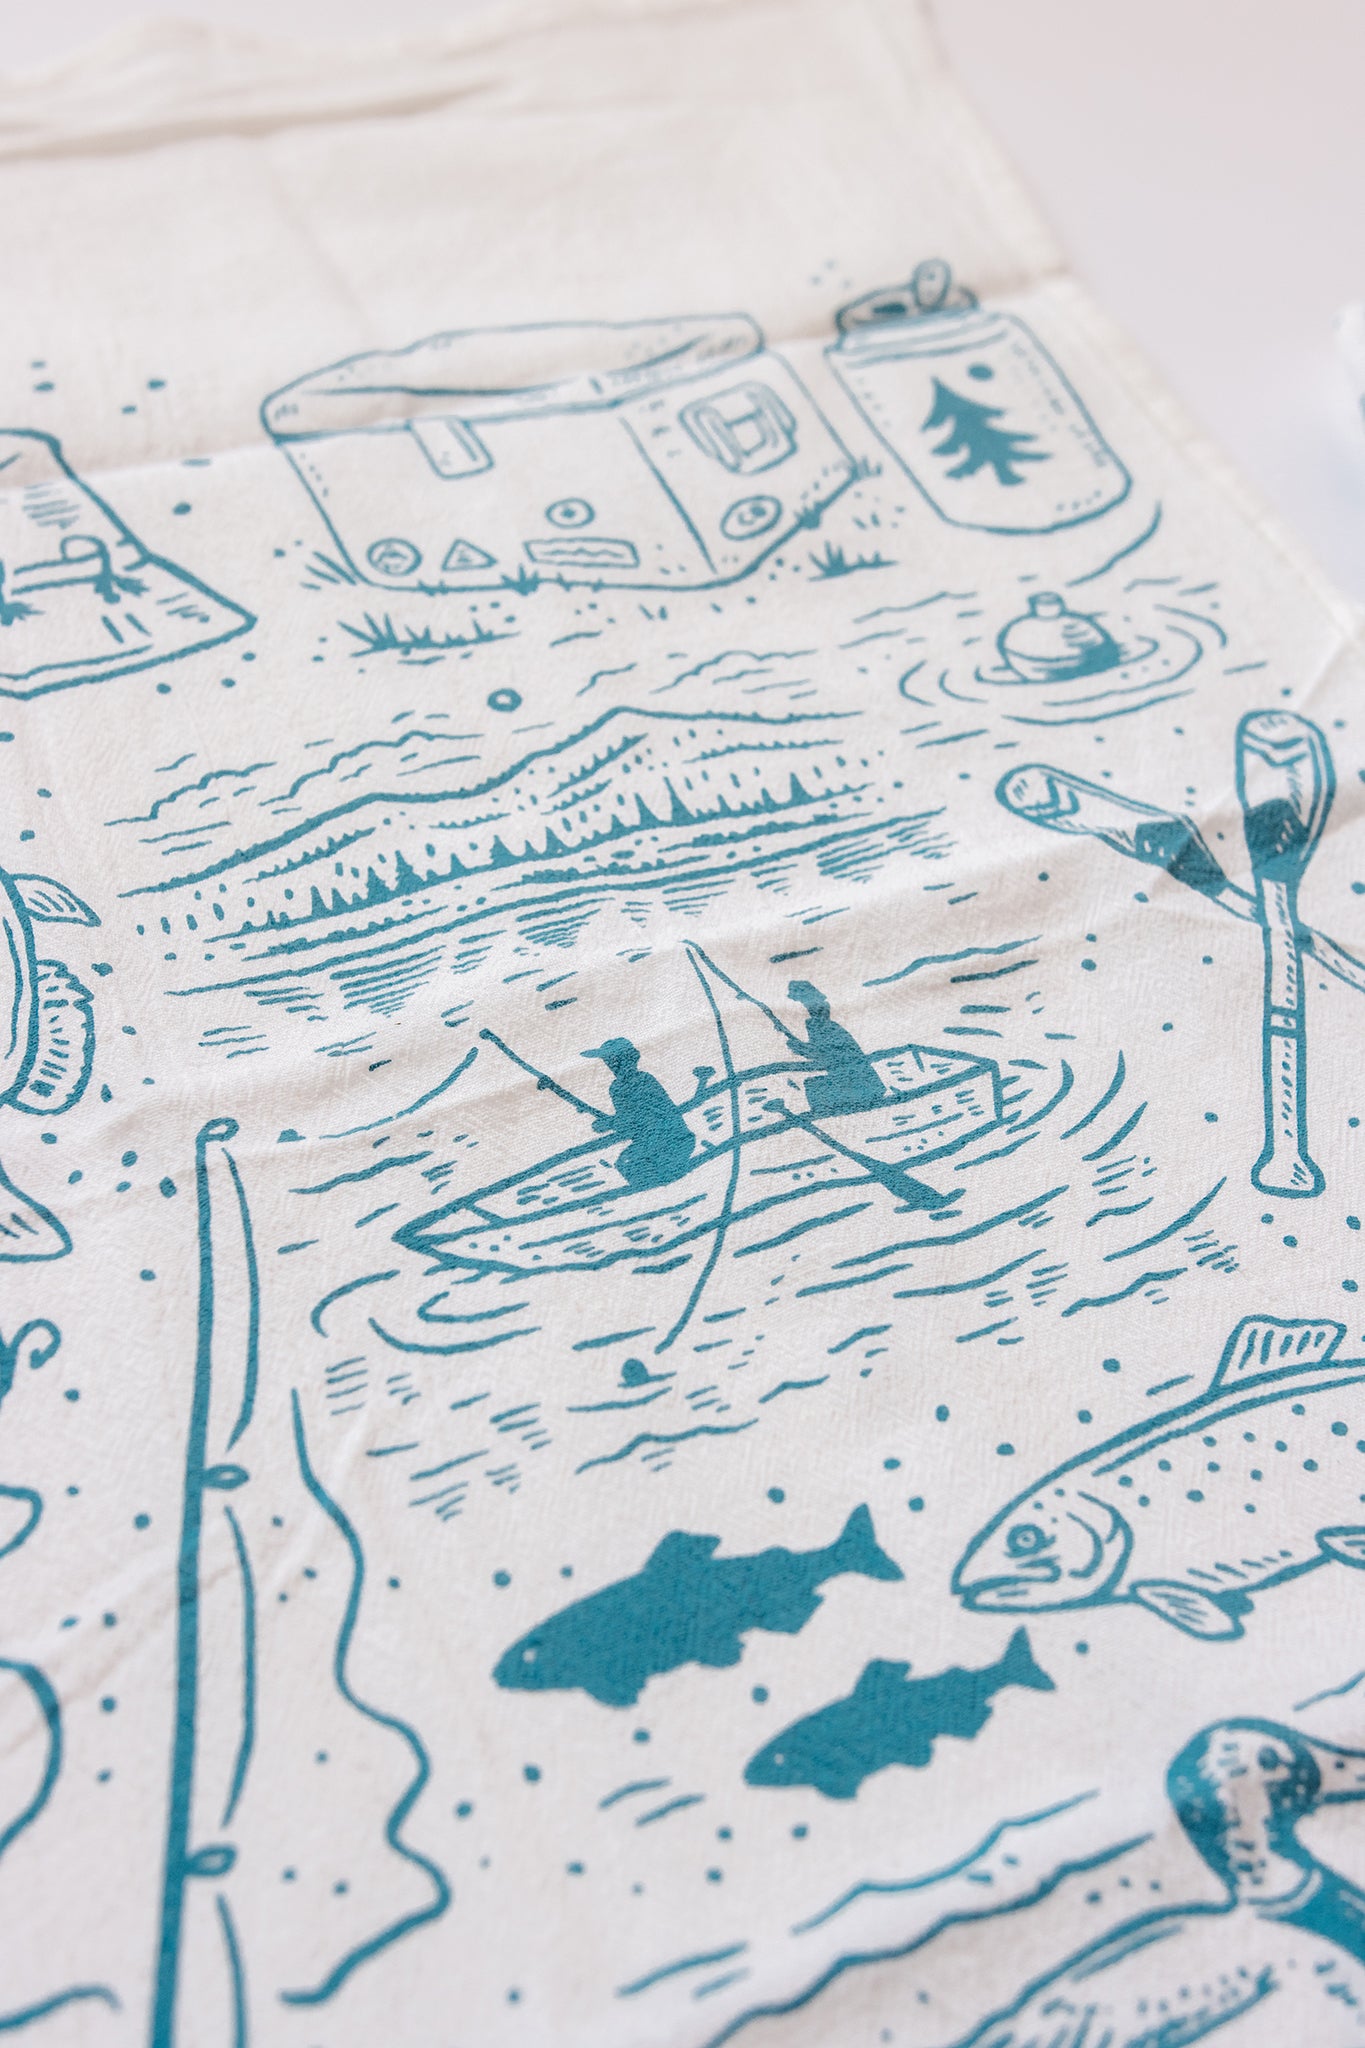 Lake Life printed tea towel with blue lake-themed illustrations